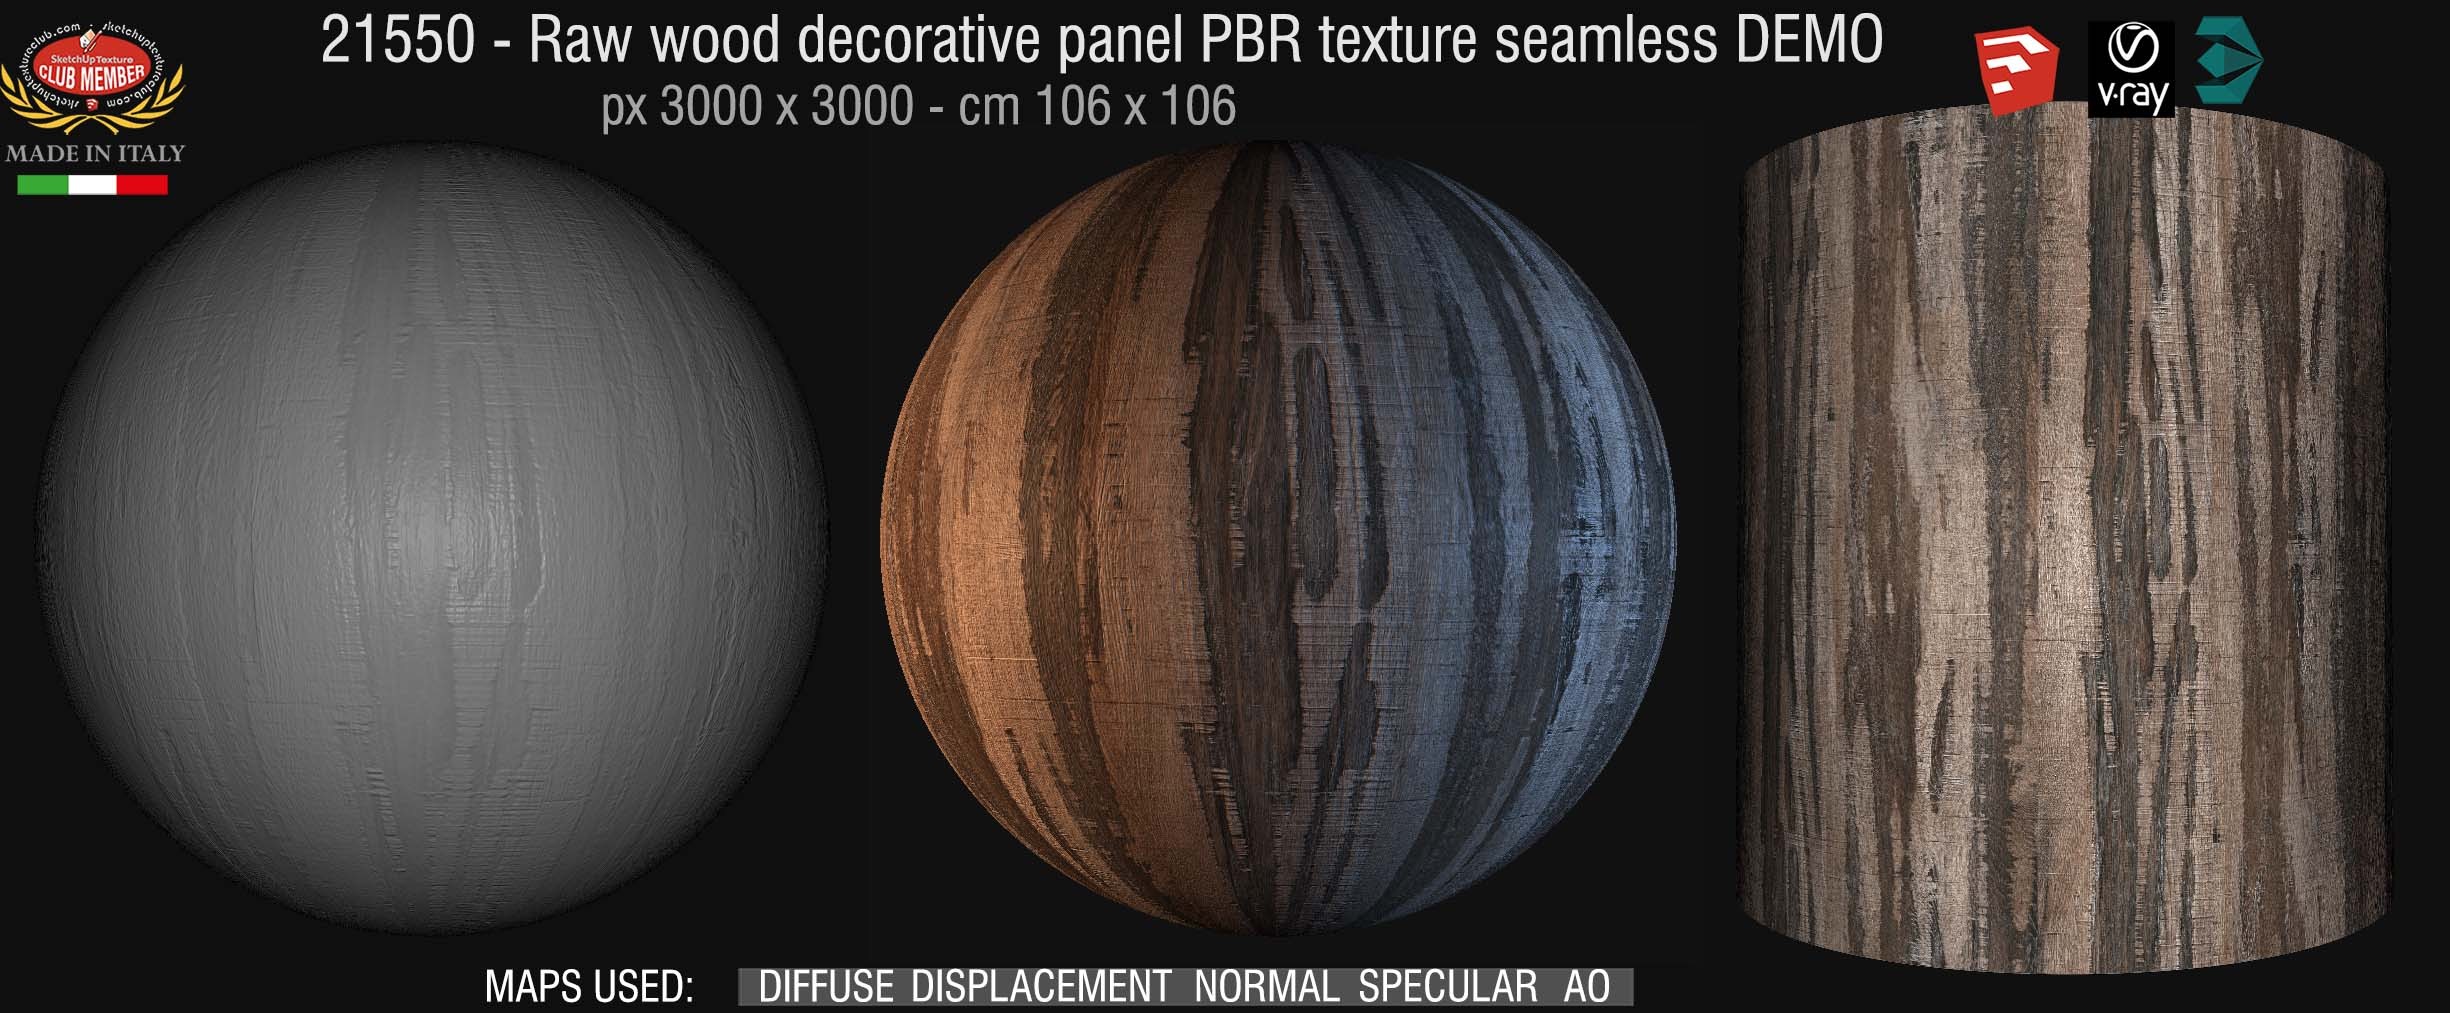 21550 Raw wood decorative panel PBR texture seamless DEMO